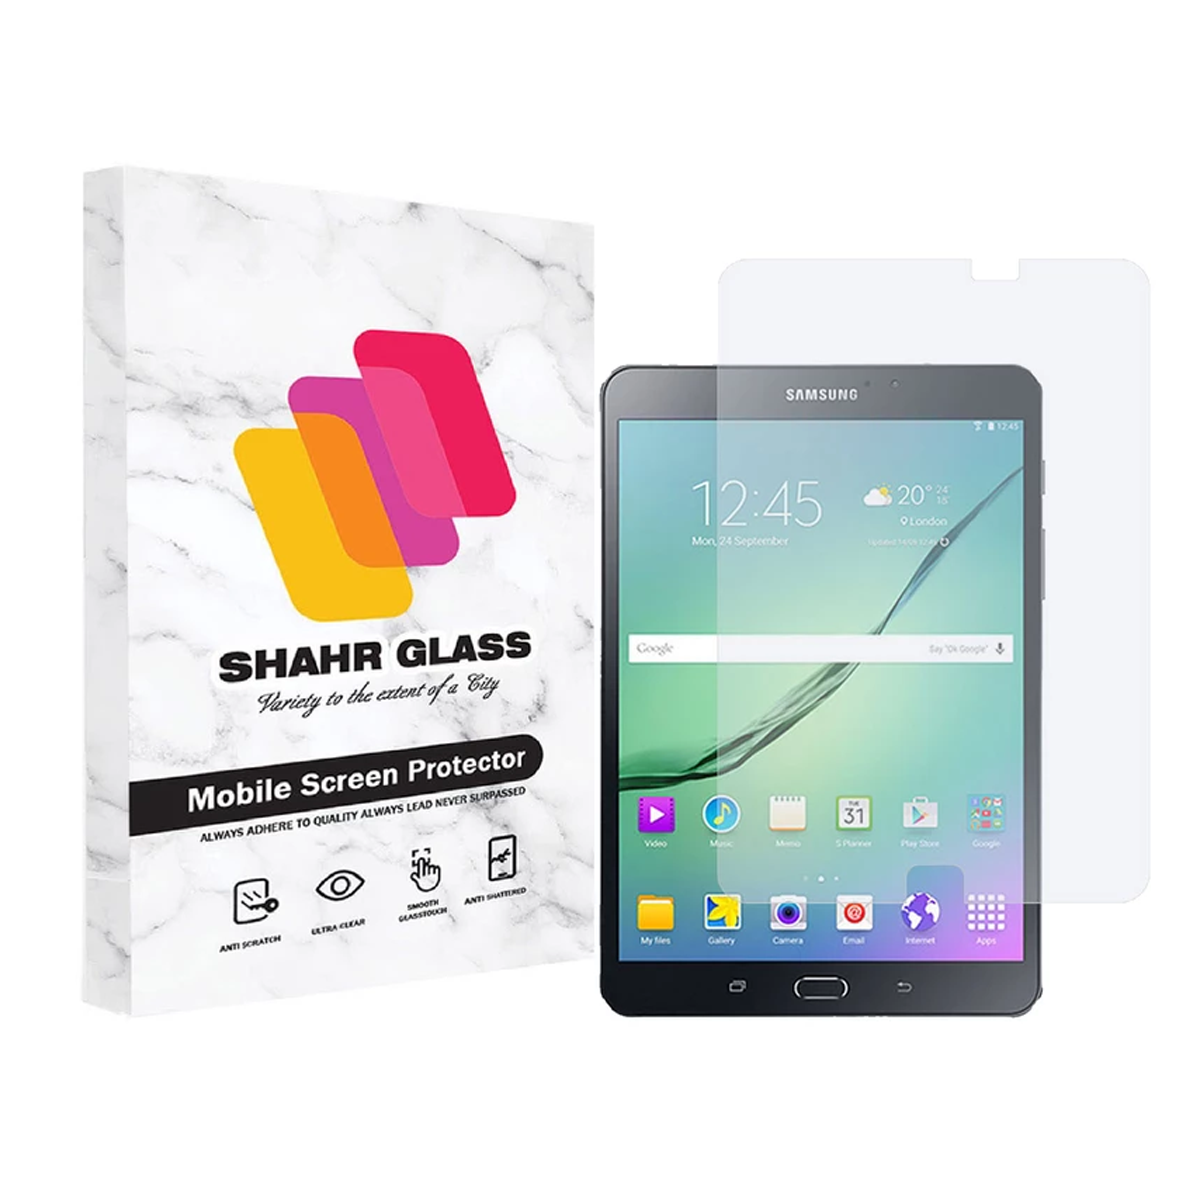 گلس تبلت سامسونگ Galaxy Tab S2 8.0 شهر گلس مدل SMPT1-بی رنگ شفاف